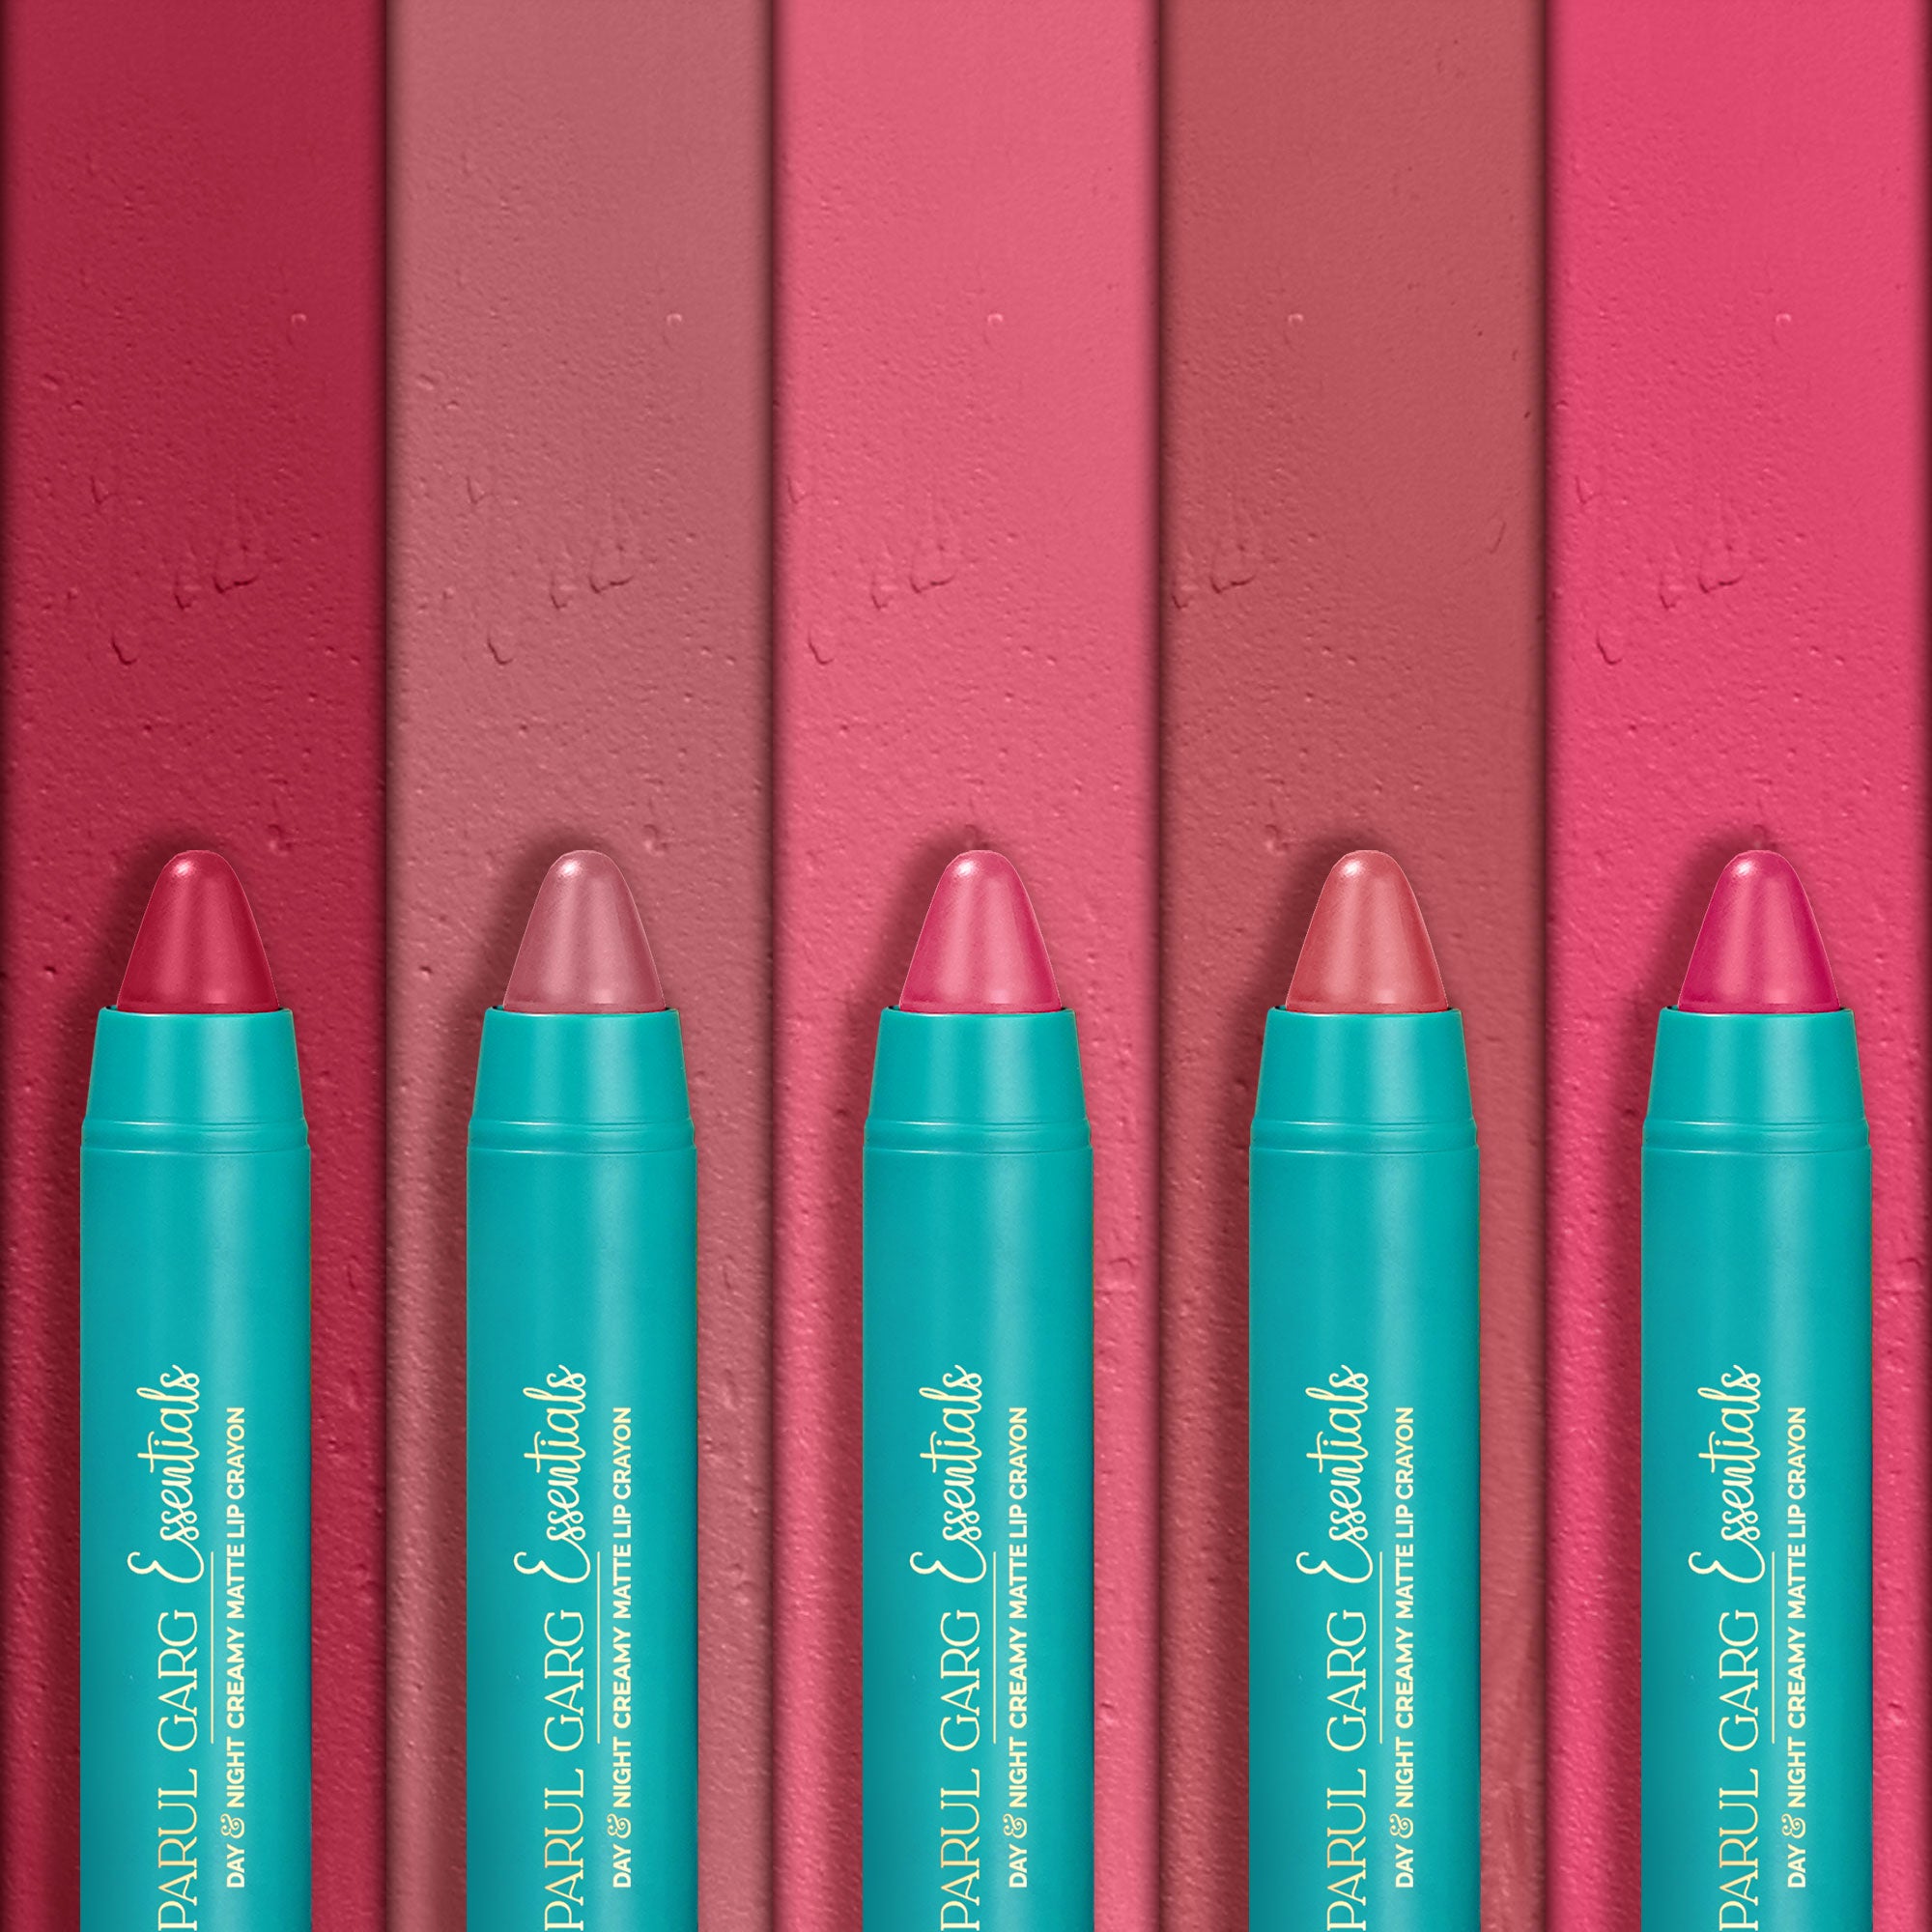 Dusky Elegance: Pack-of-Five Creamy Matte Lip Crayons